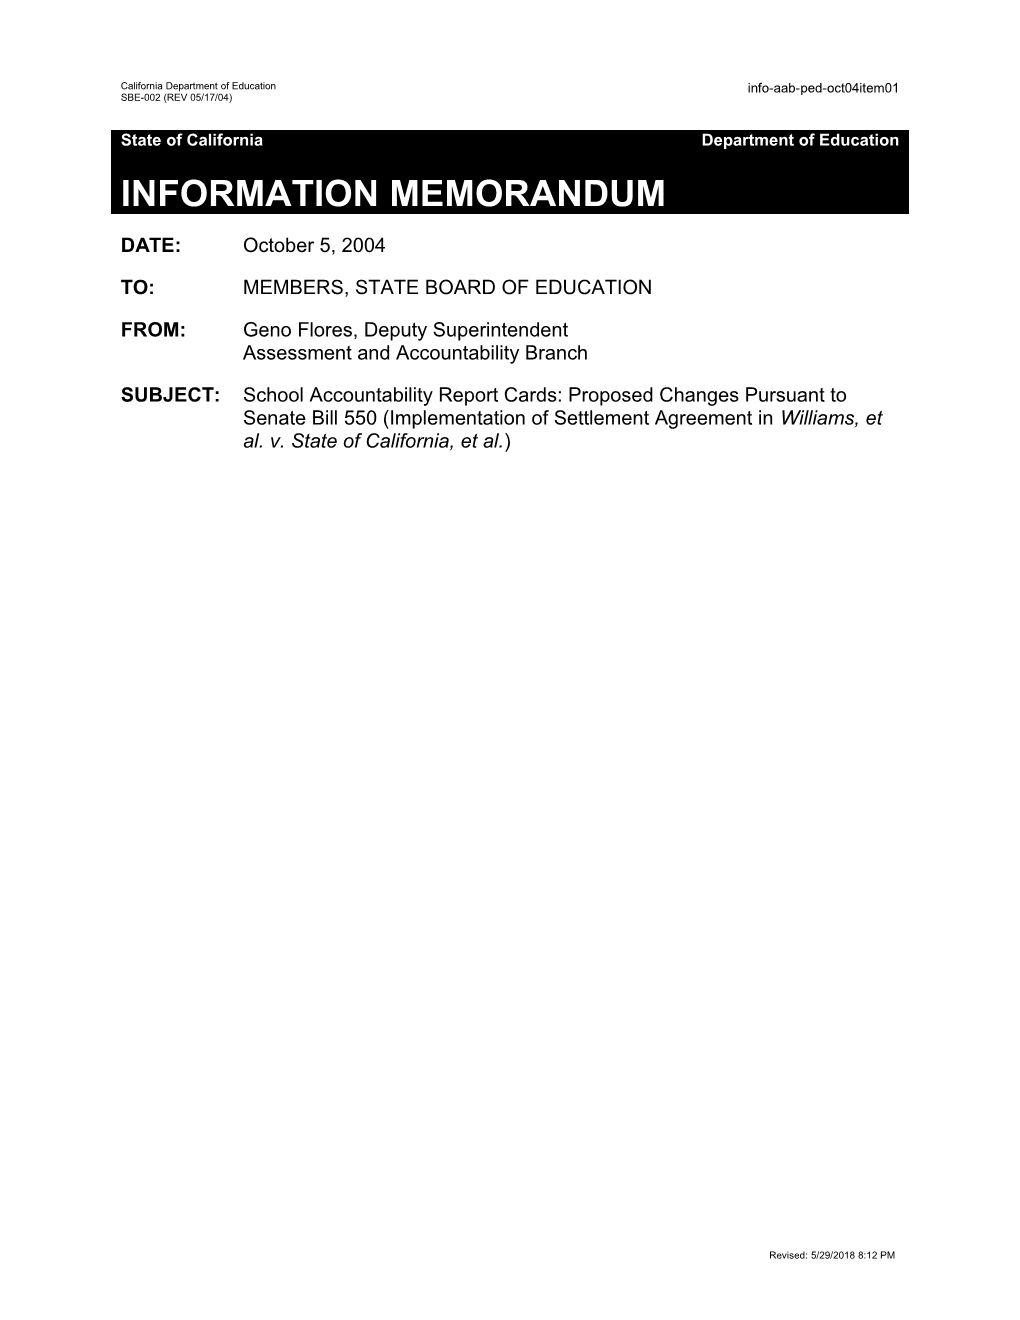 October 2004 PED Agenda Item 1 - Information Memorandum (CA State Board of Education)